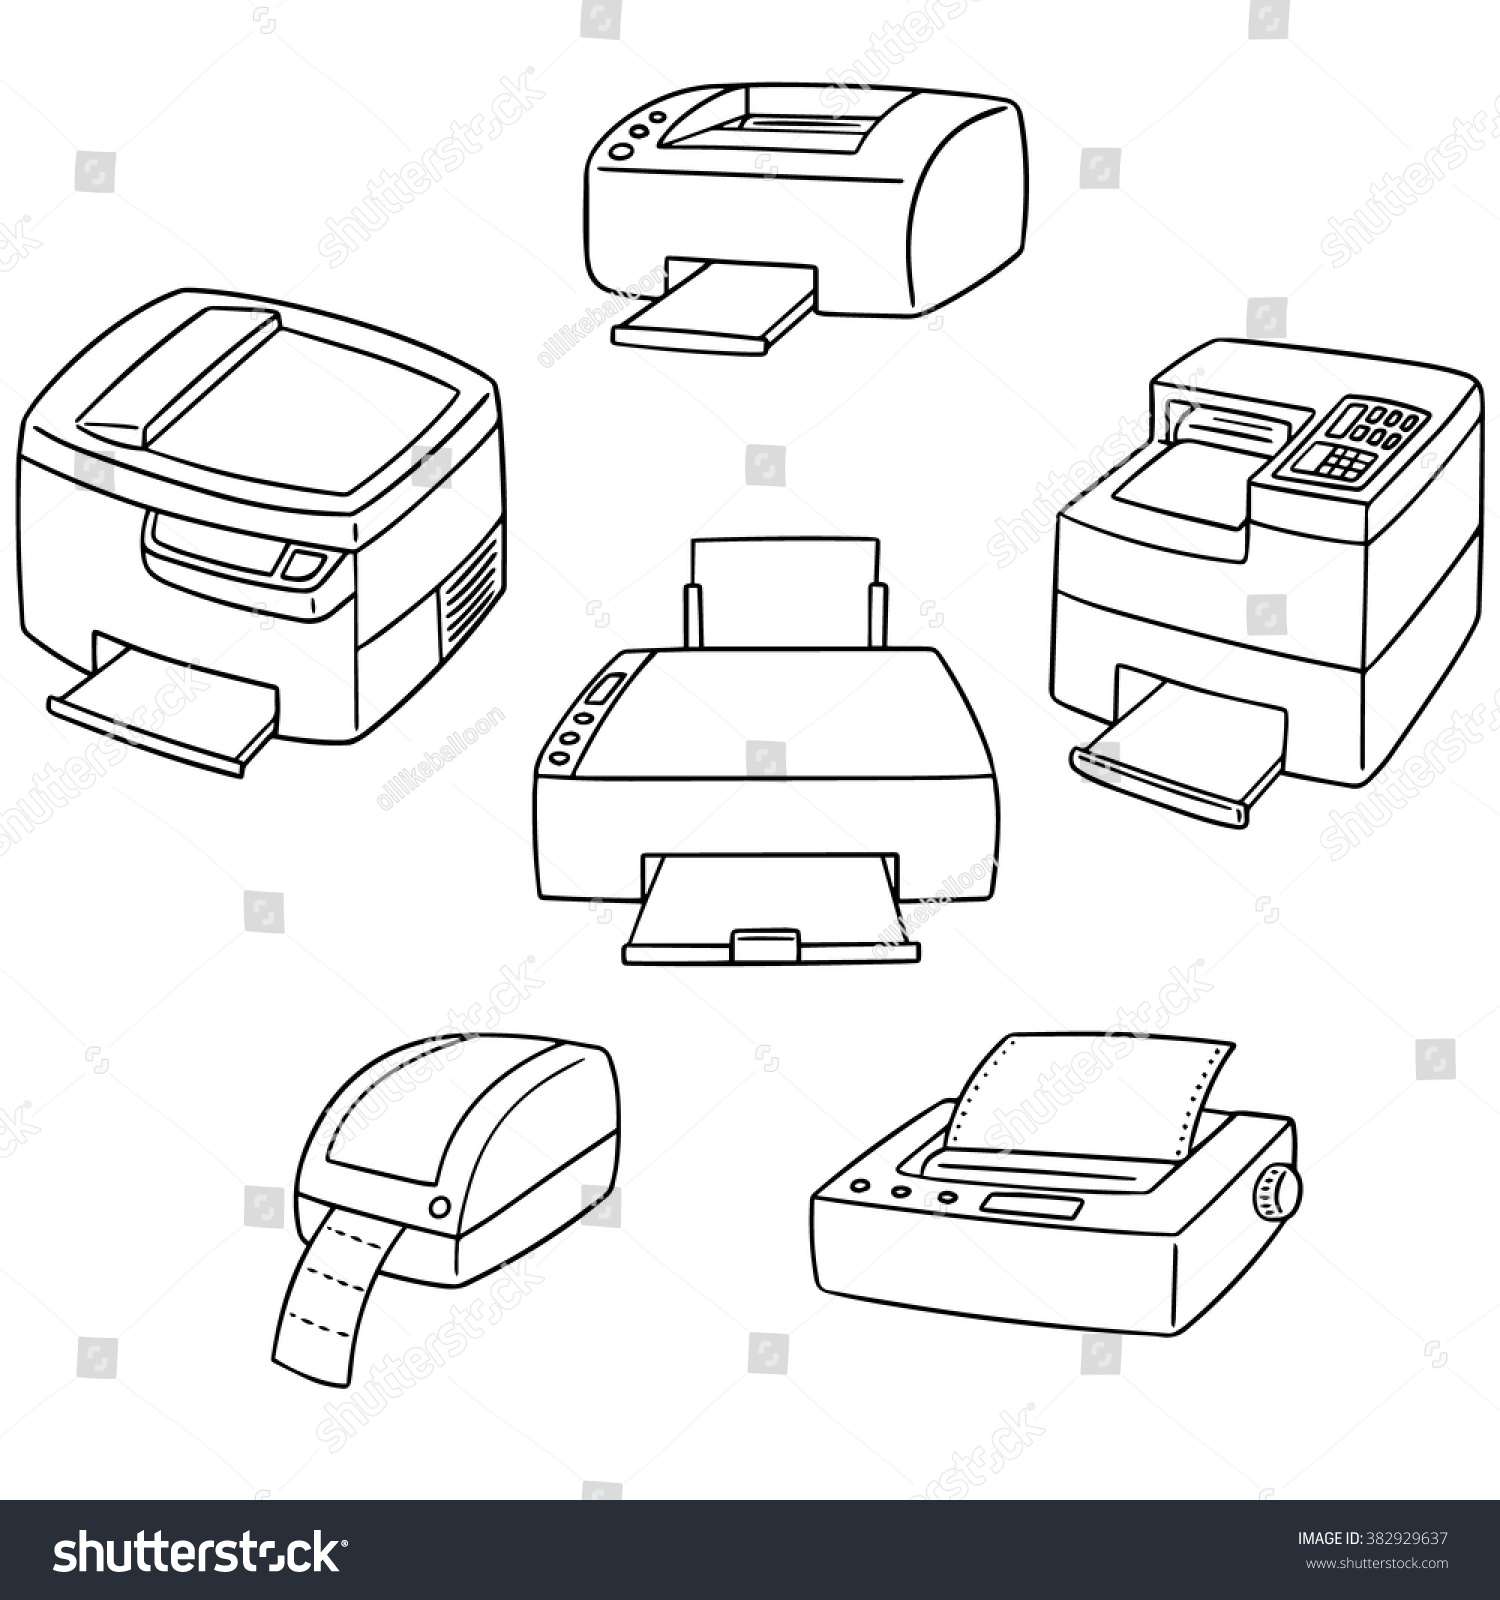 Vector Set Of Printer - 382929637 : Shutterstock